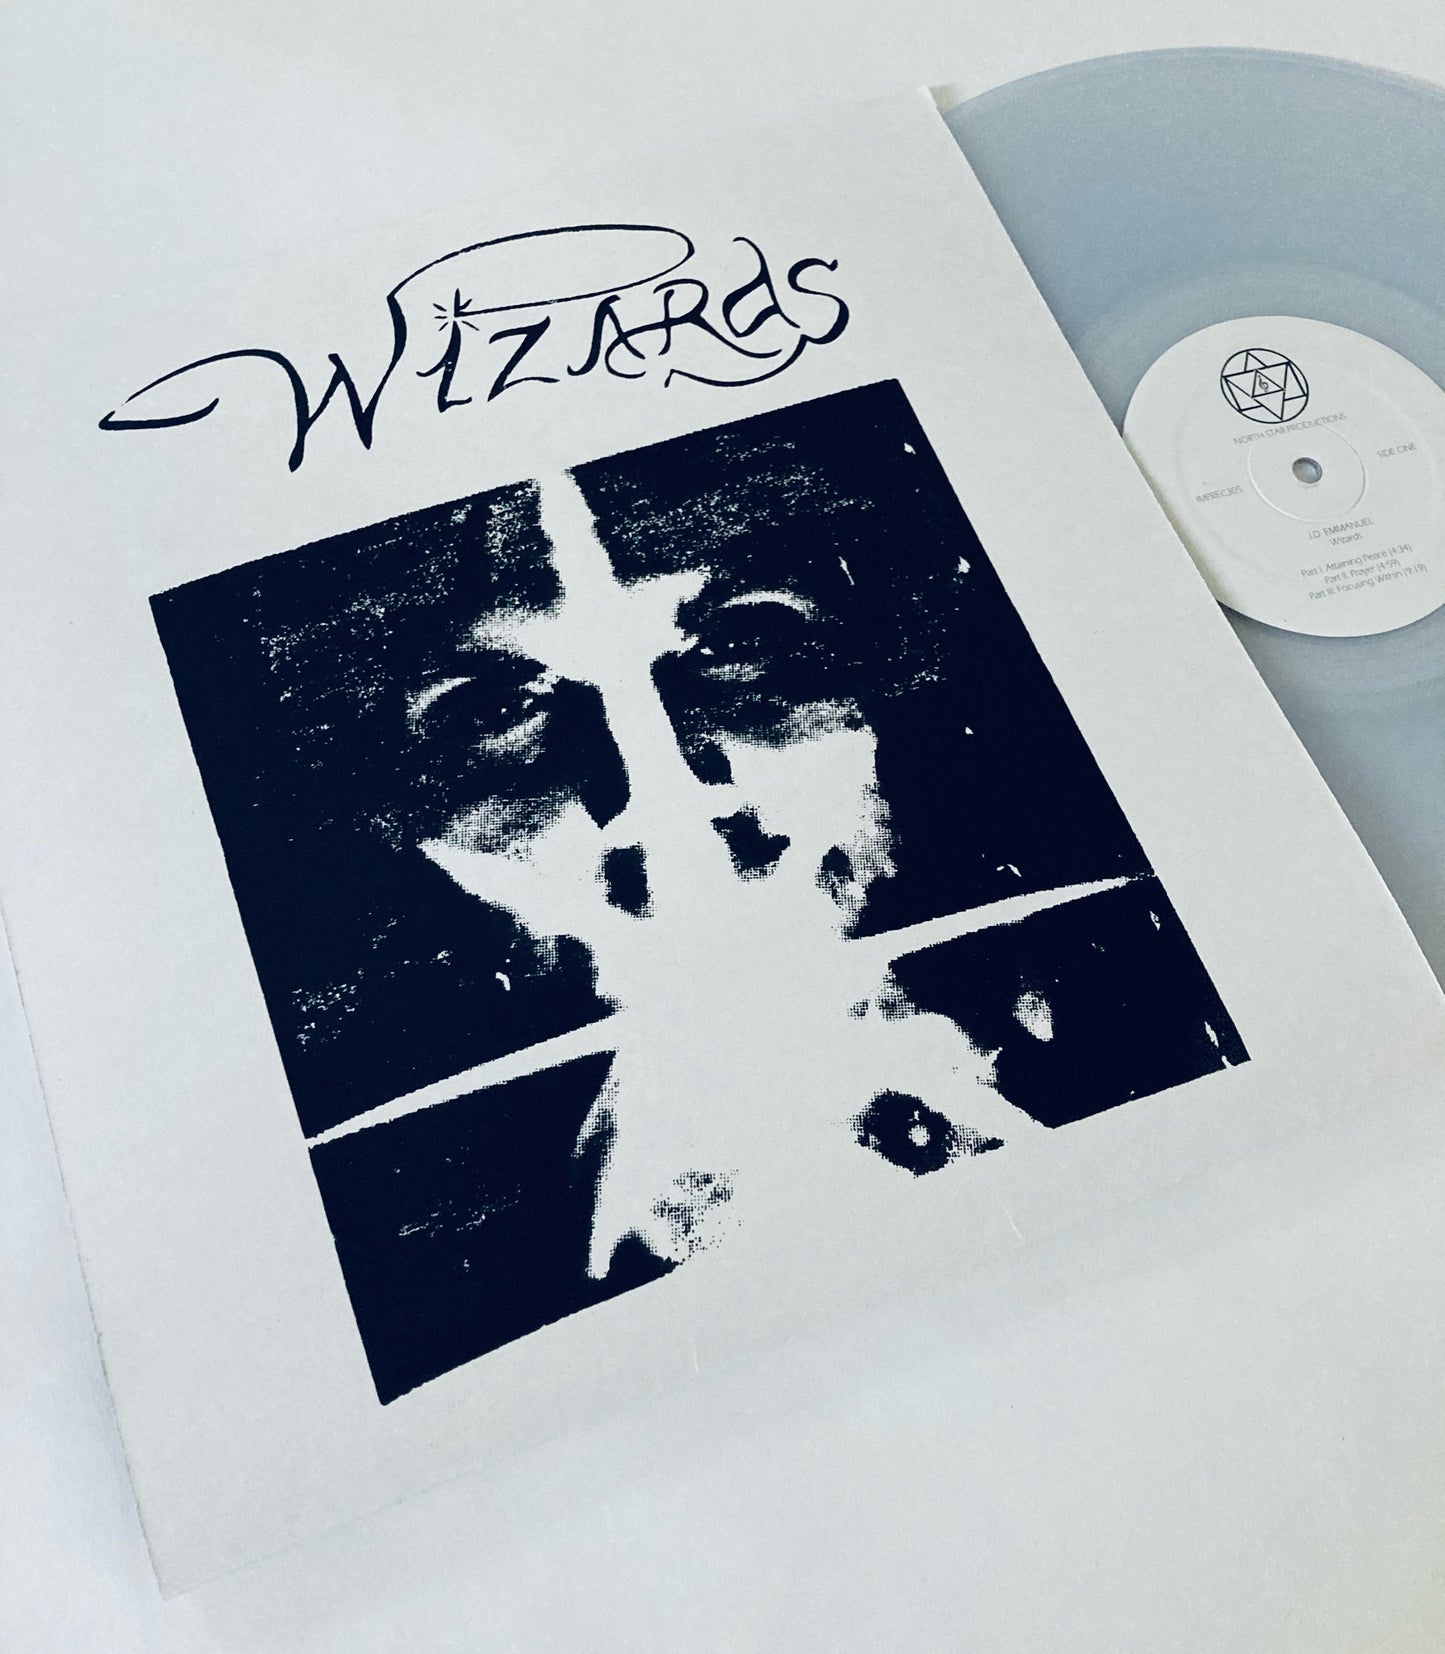 JD Emmanuel - Wizards - LP / CD